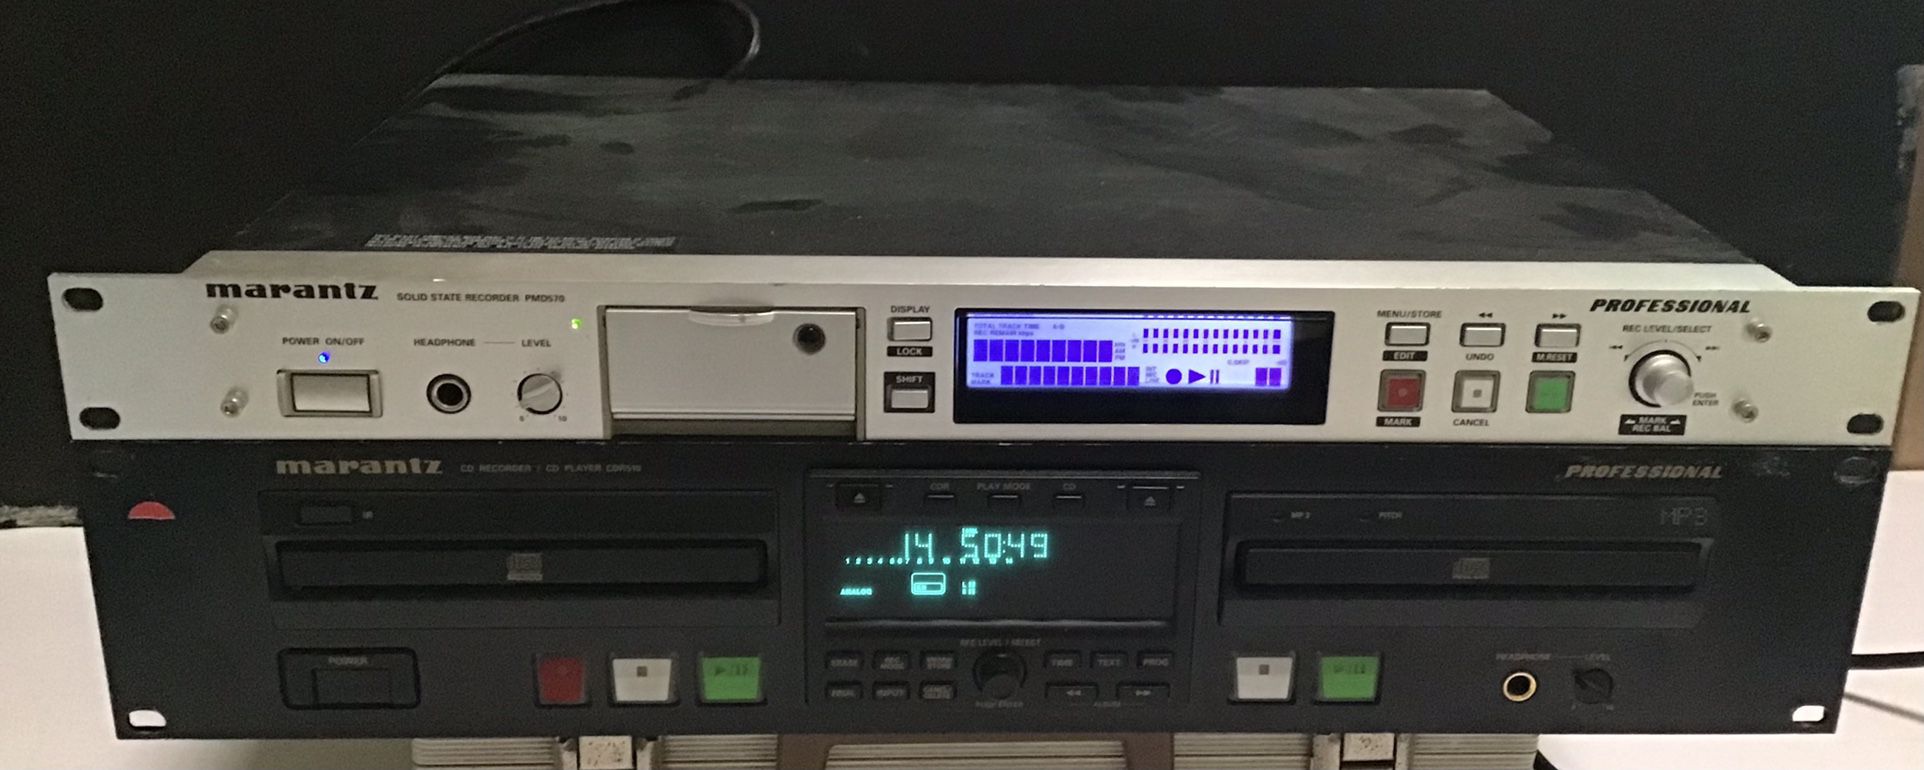 Marantz PMD570 solid state recorder & Marantz CDR 510 dual tray CD recorder